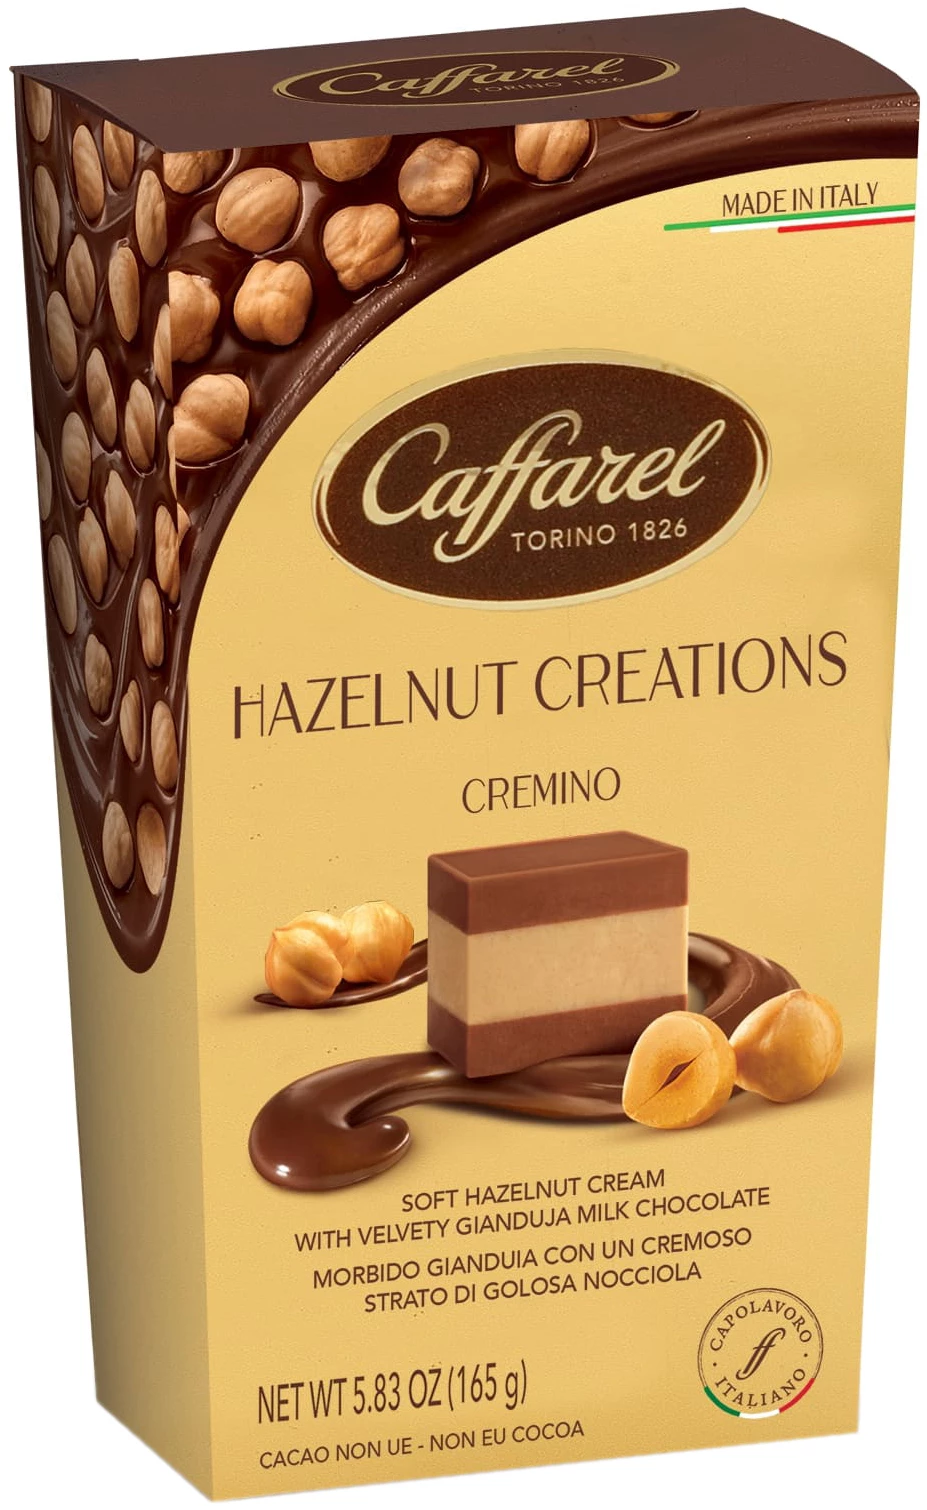 Chocolate creation piemonte cone with hazelnuts 165G - CAFFAREL